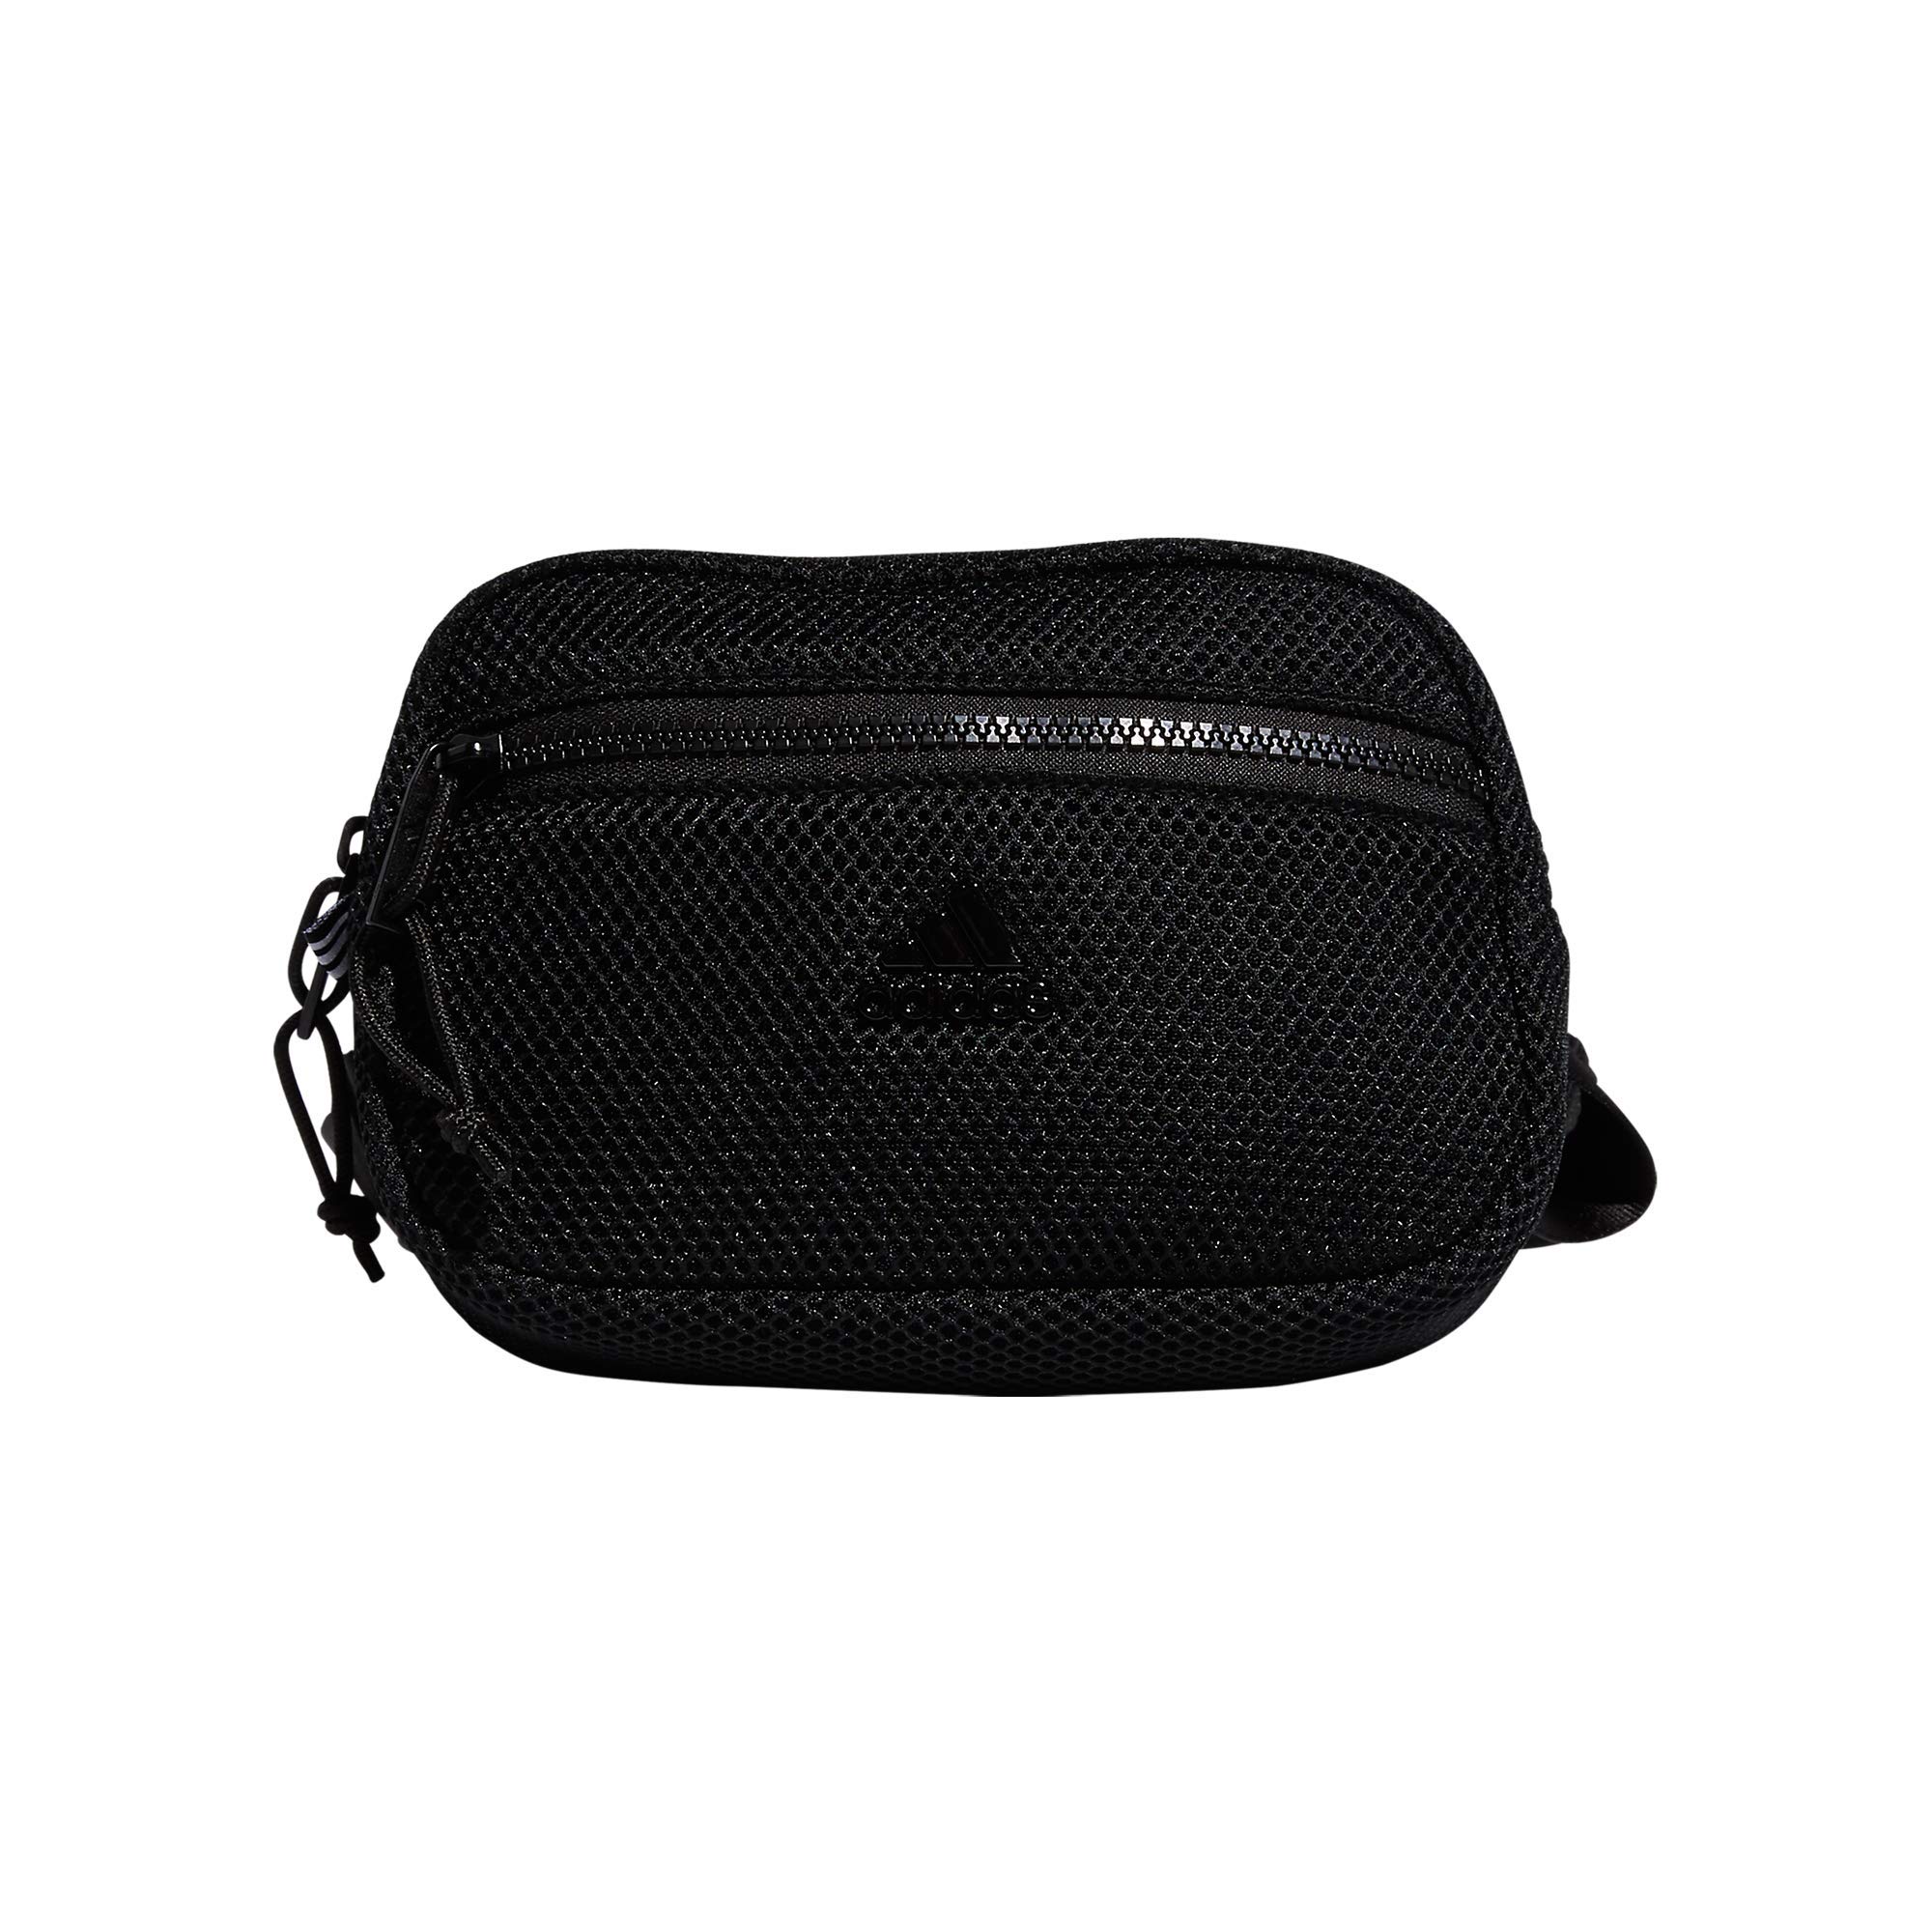 adidas Airmesh Waist Pack/Travel Bag, Black, One Size